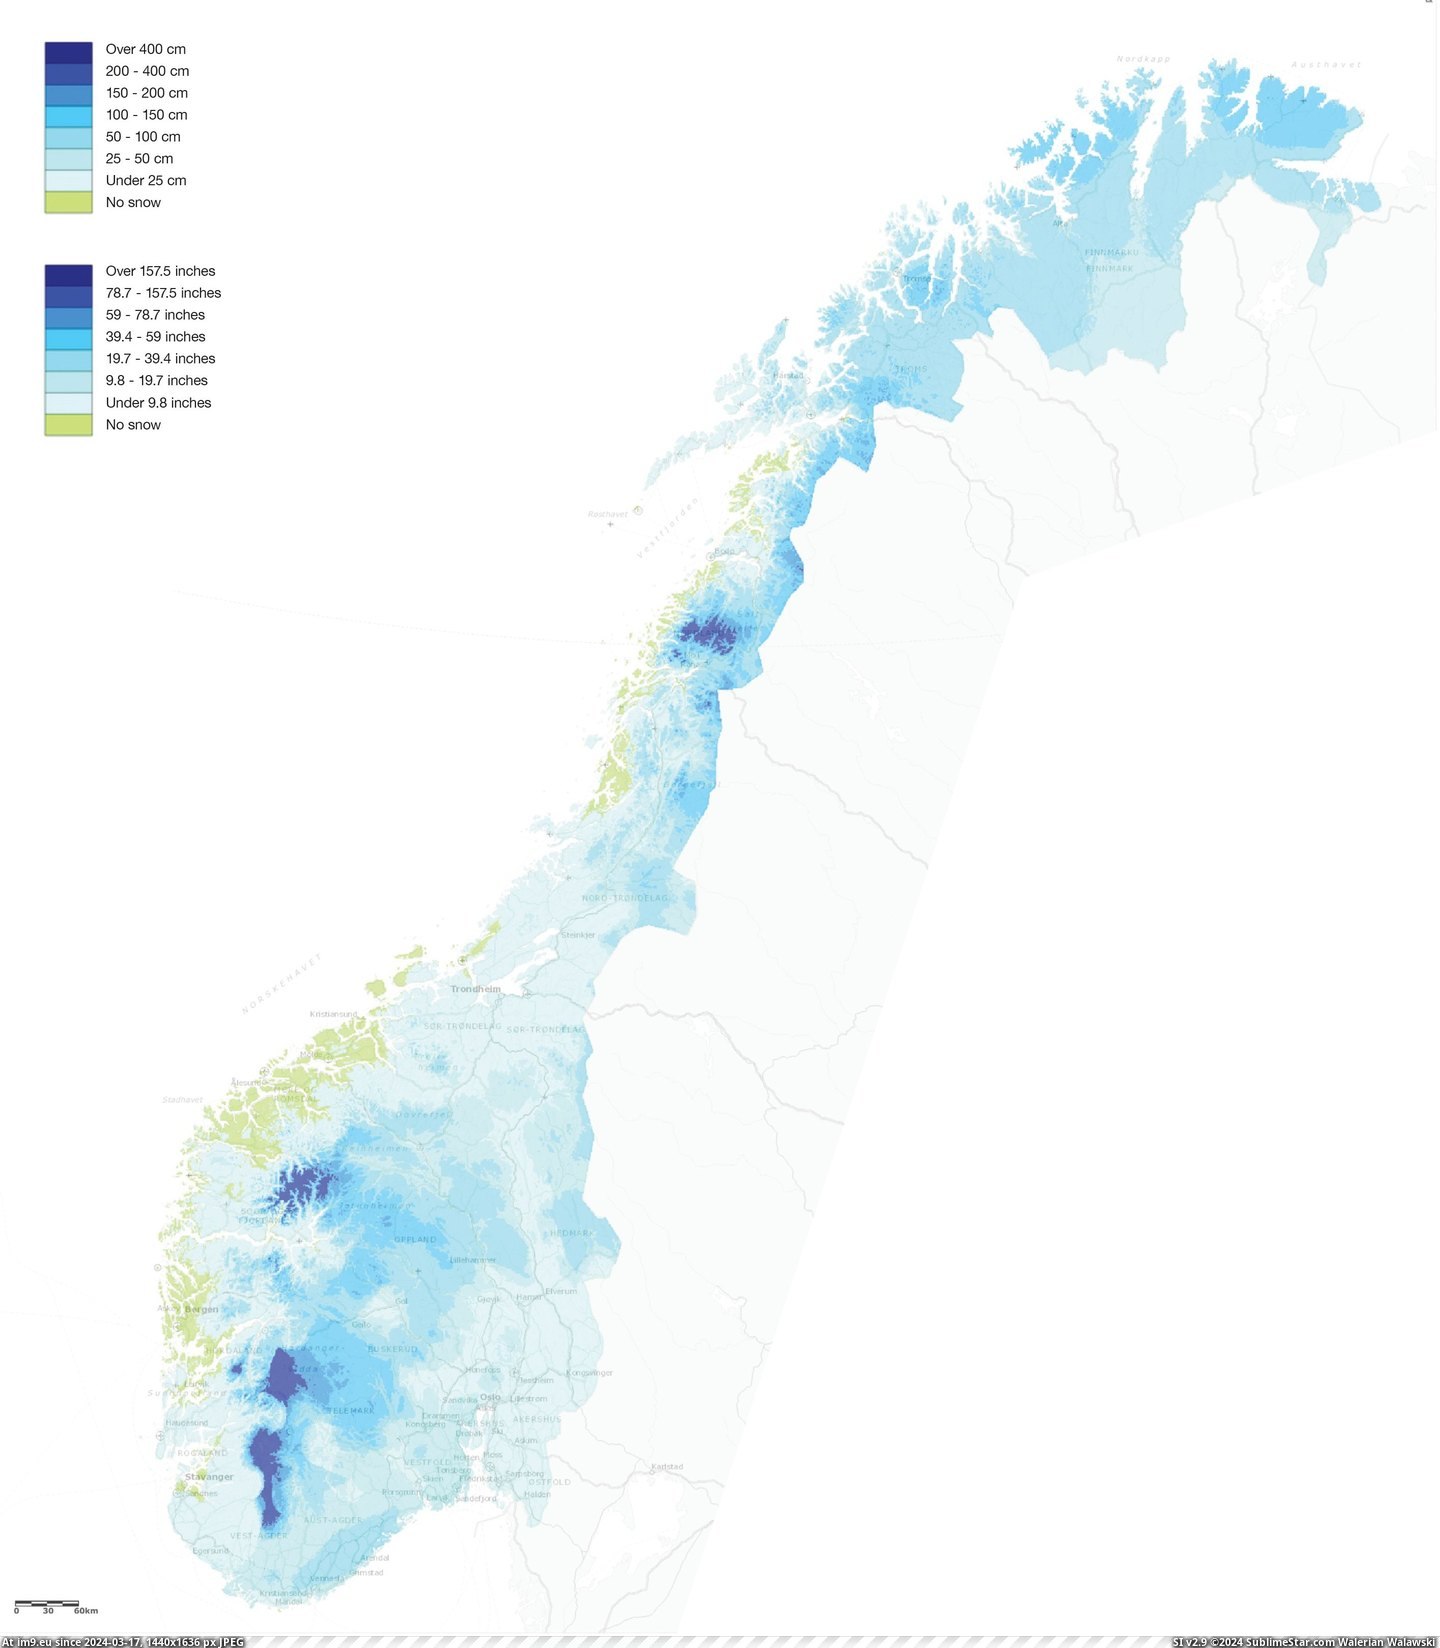 #Snow #Current #Depth #Norway [Dataisbeautiful] Current snow depth in Norway Pic. (Bild von album My r/DATAISBEAUTIFUL favs))